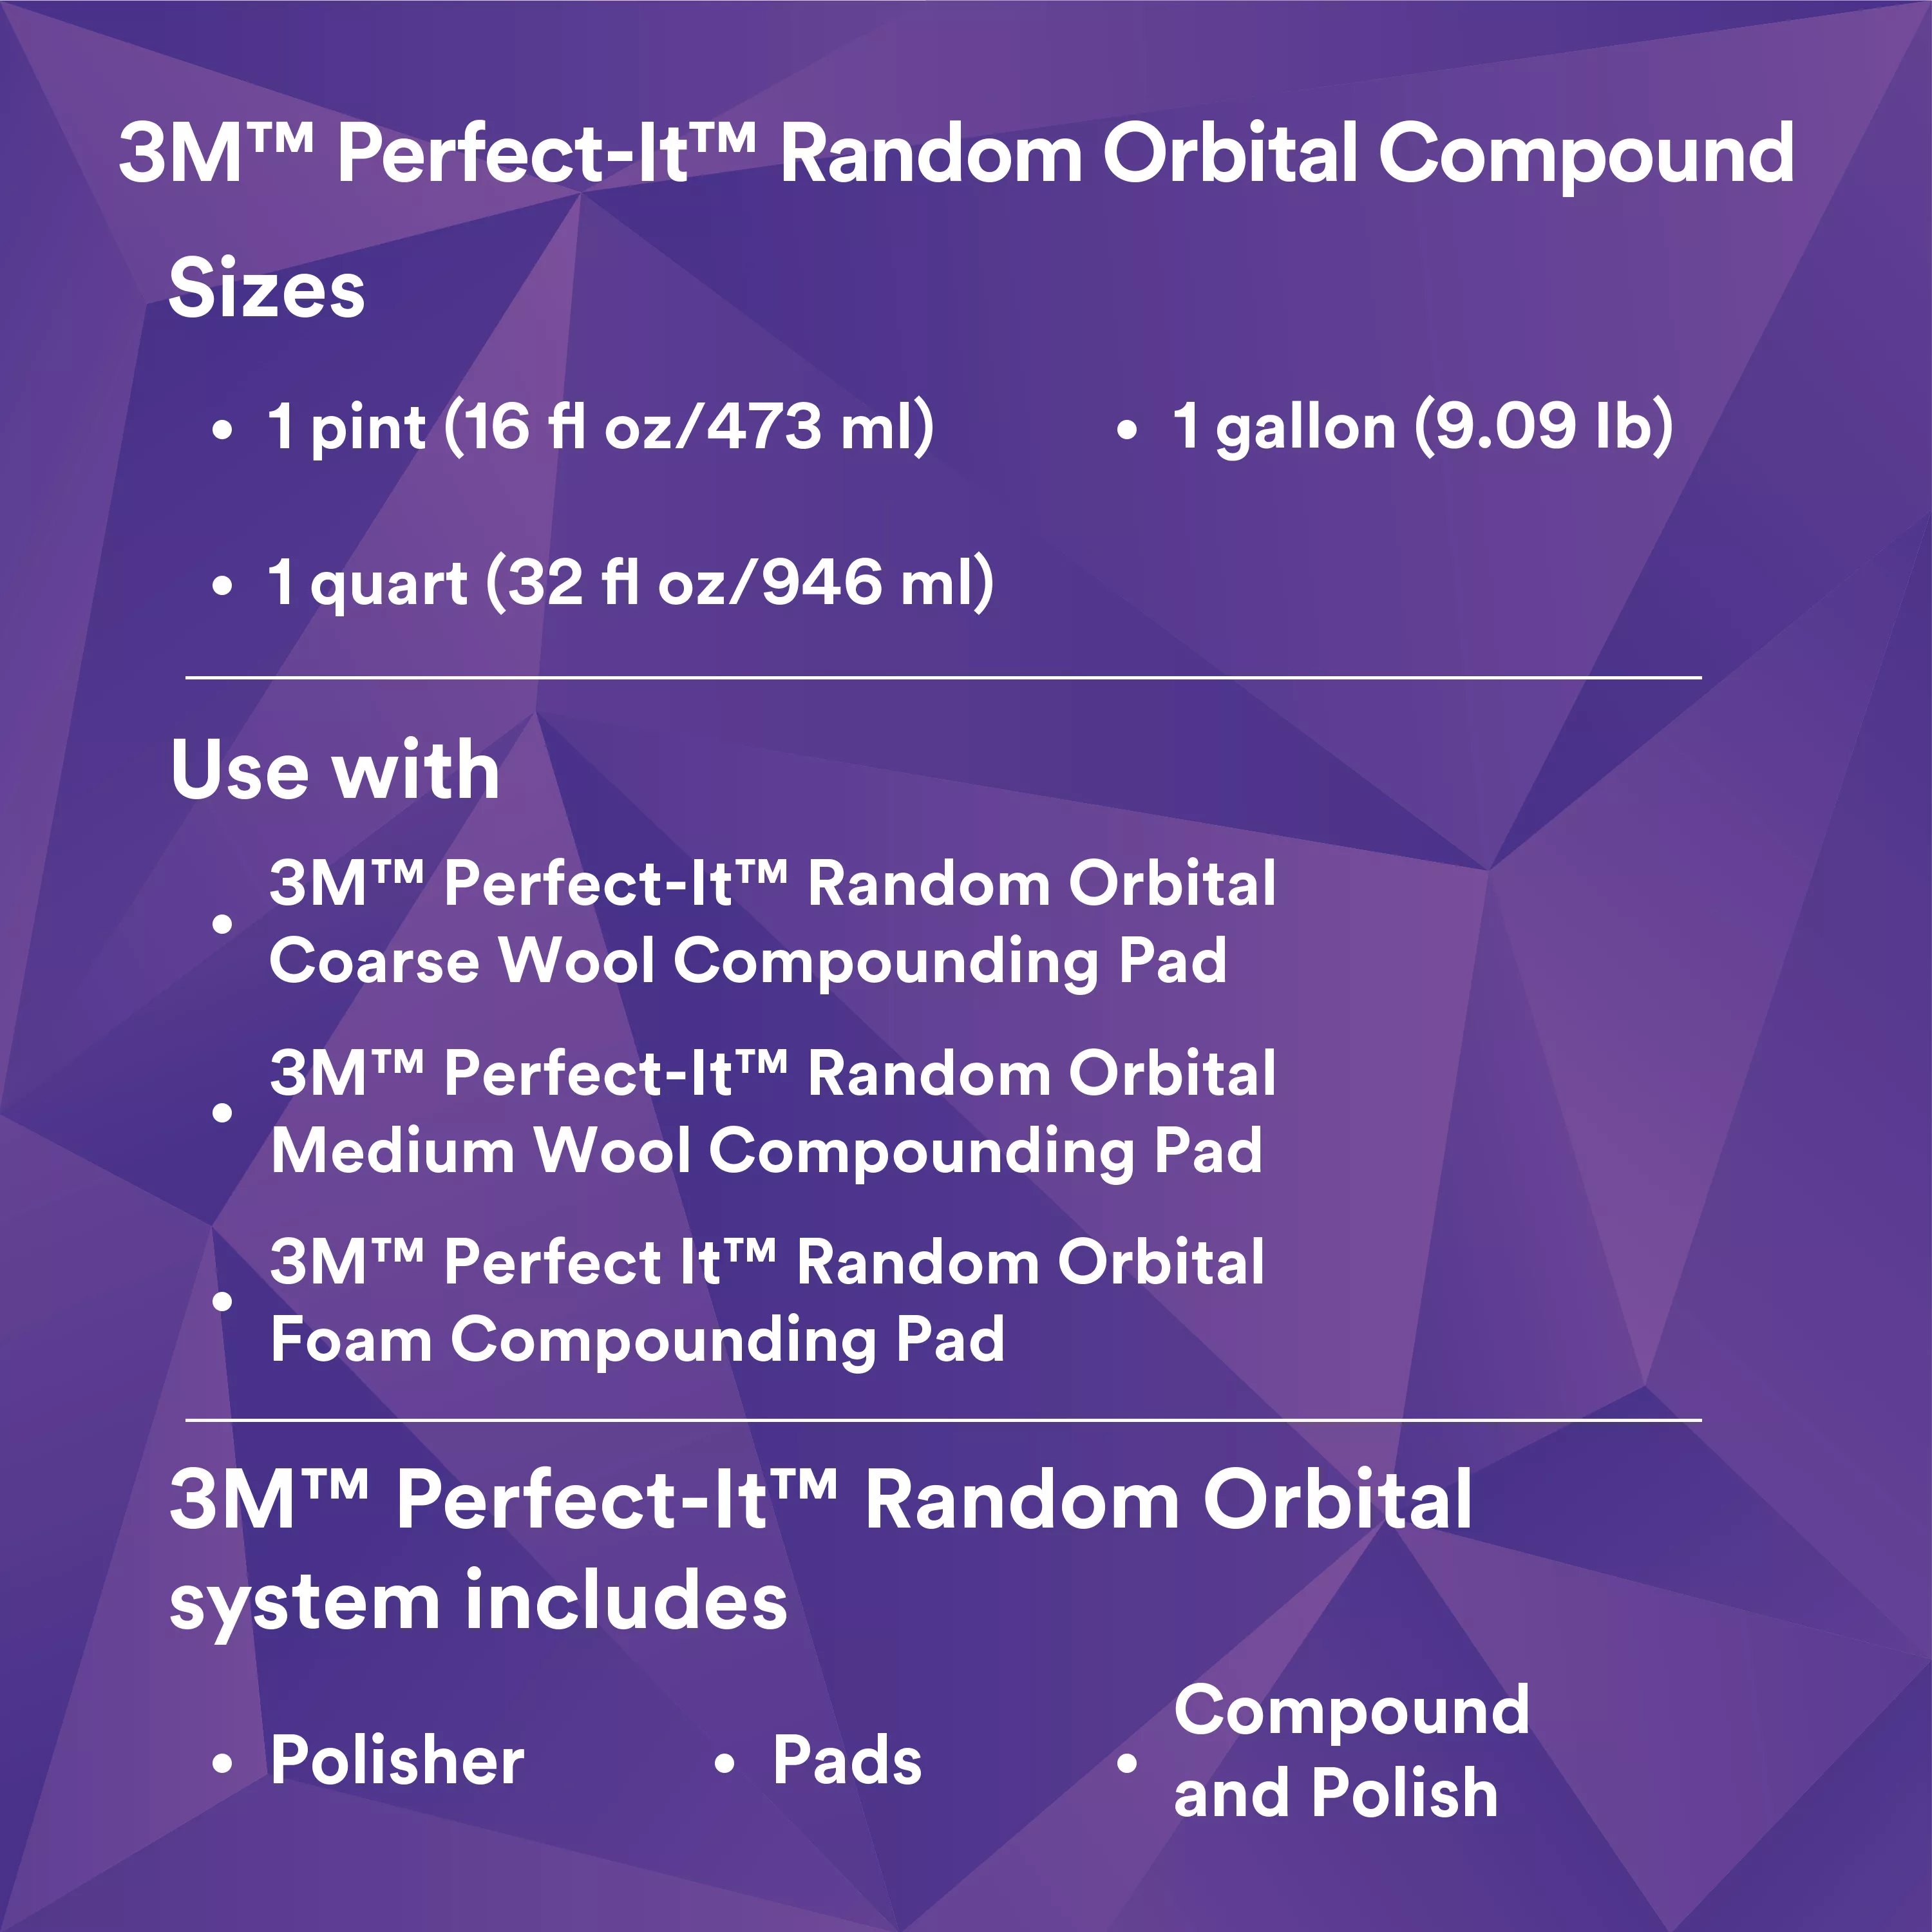 SKU 7100270078 | 3M™ Perfect-It™ Random Orbital Compound 34131